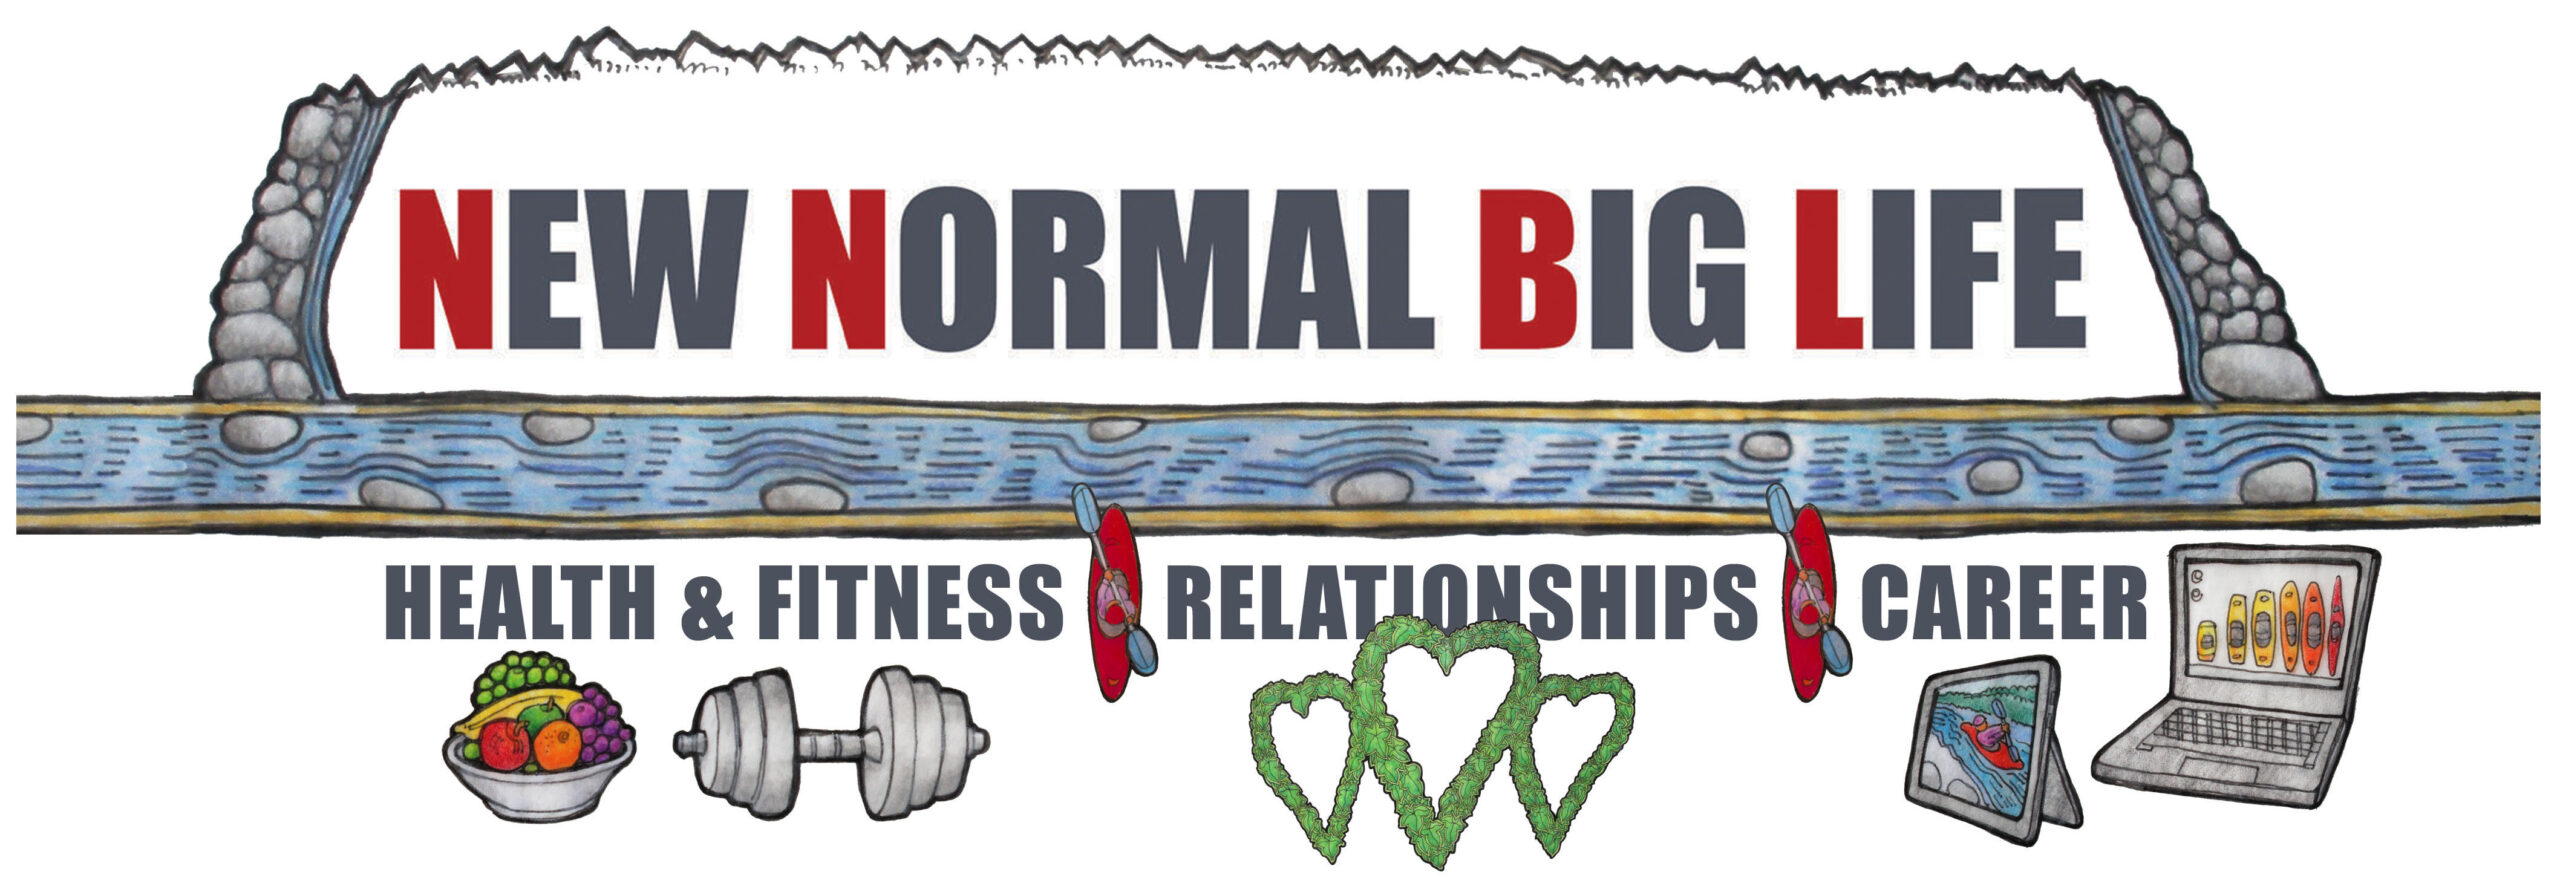 New Normal Big Life Blog Logo Health and fitness relationships career self-help advice